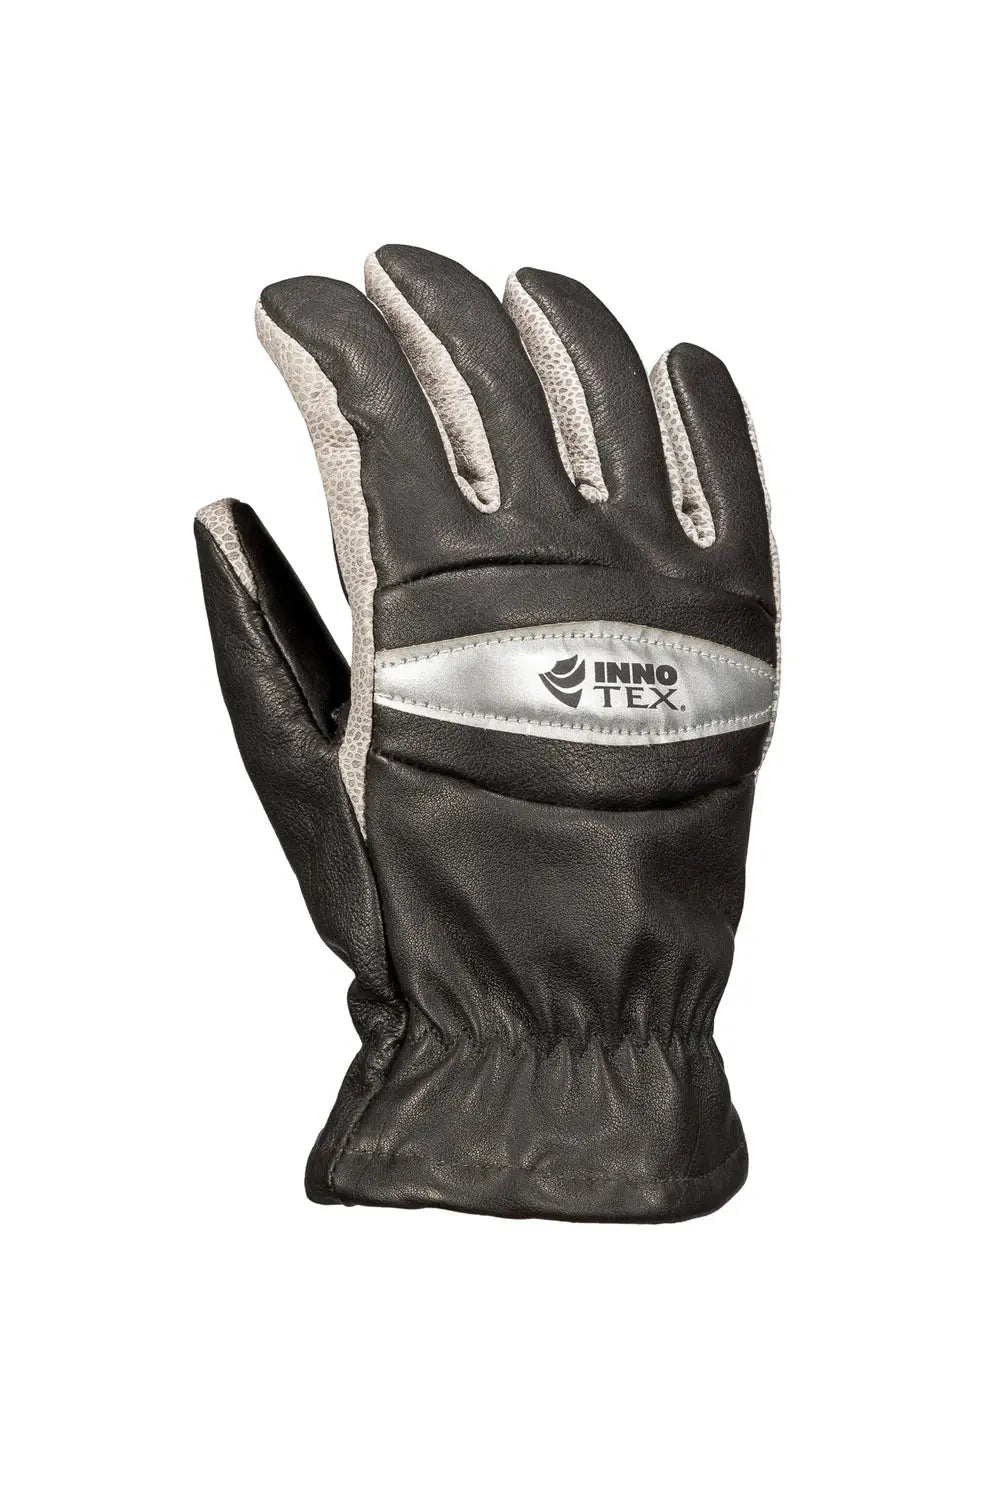 Innotex - 880S/885S 3D Structure Glove